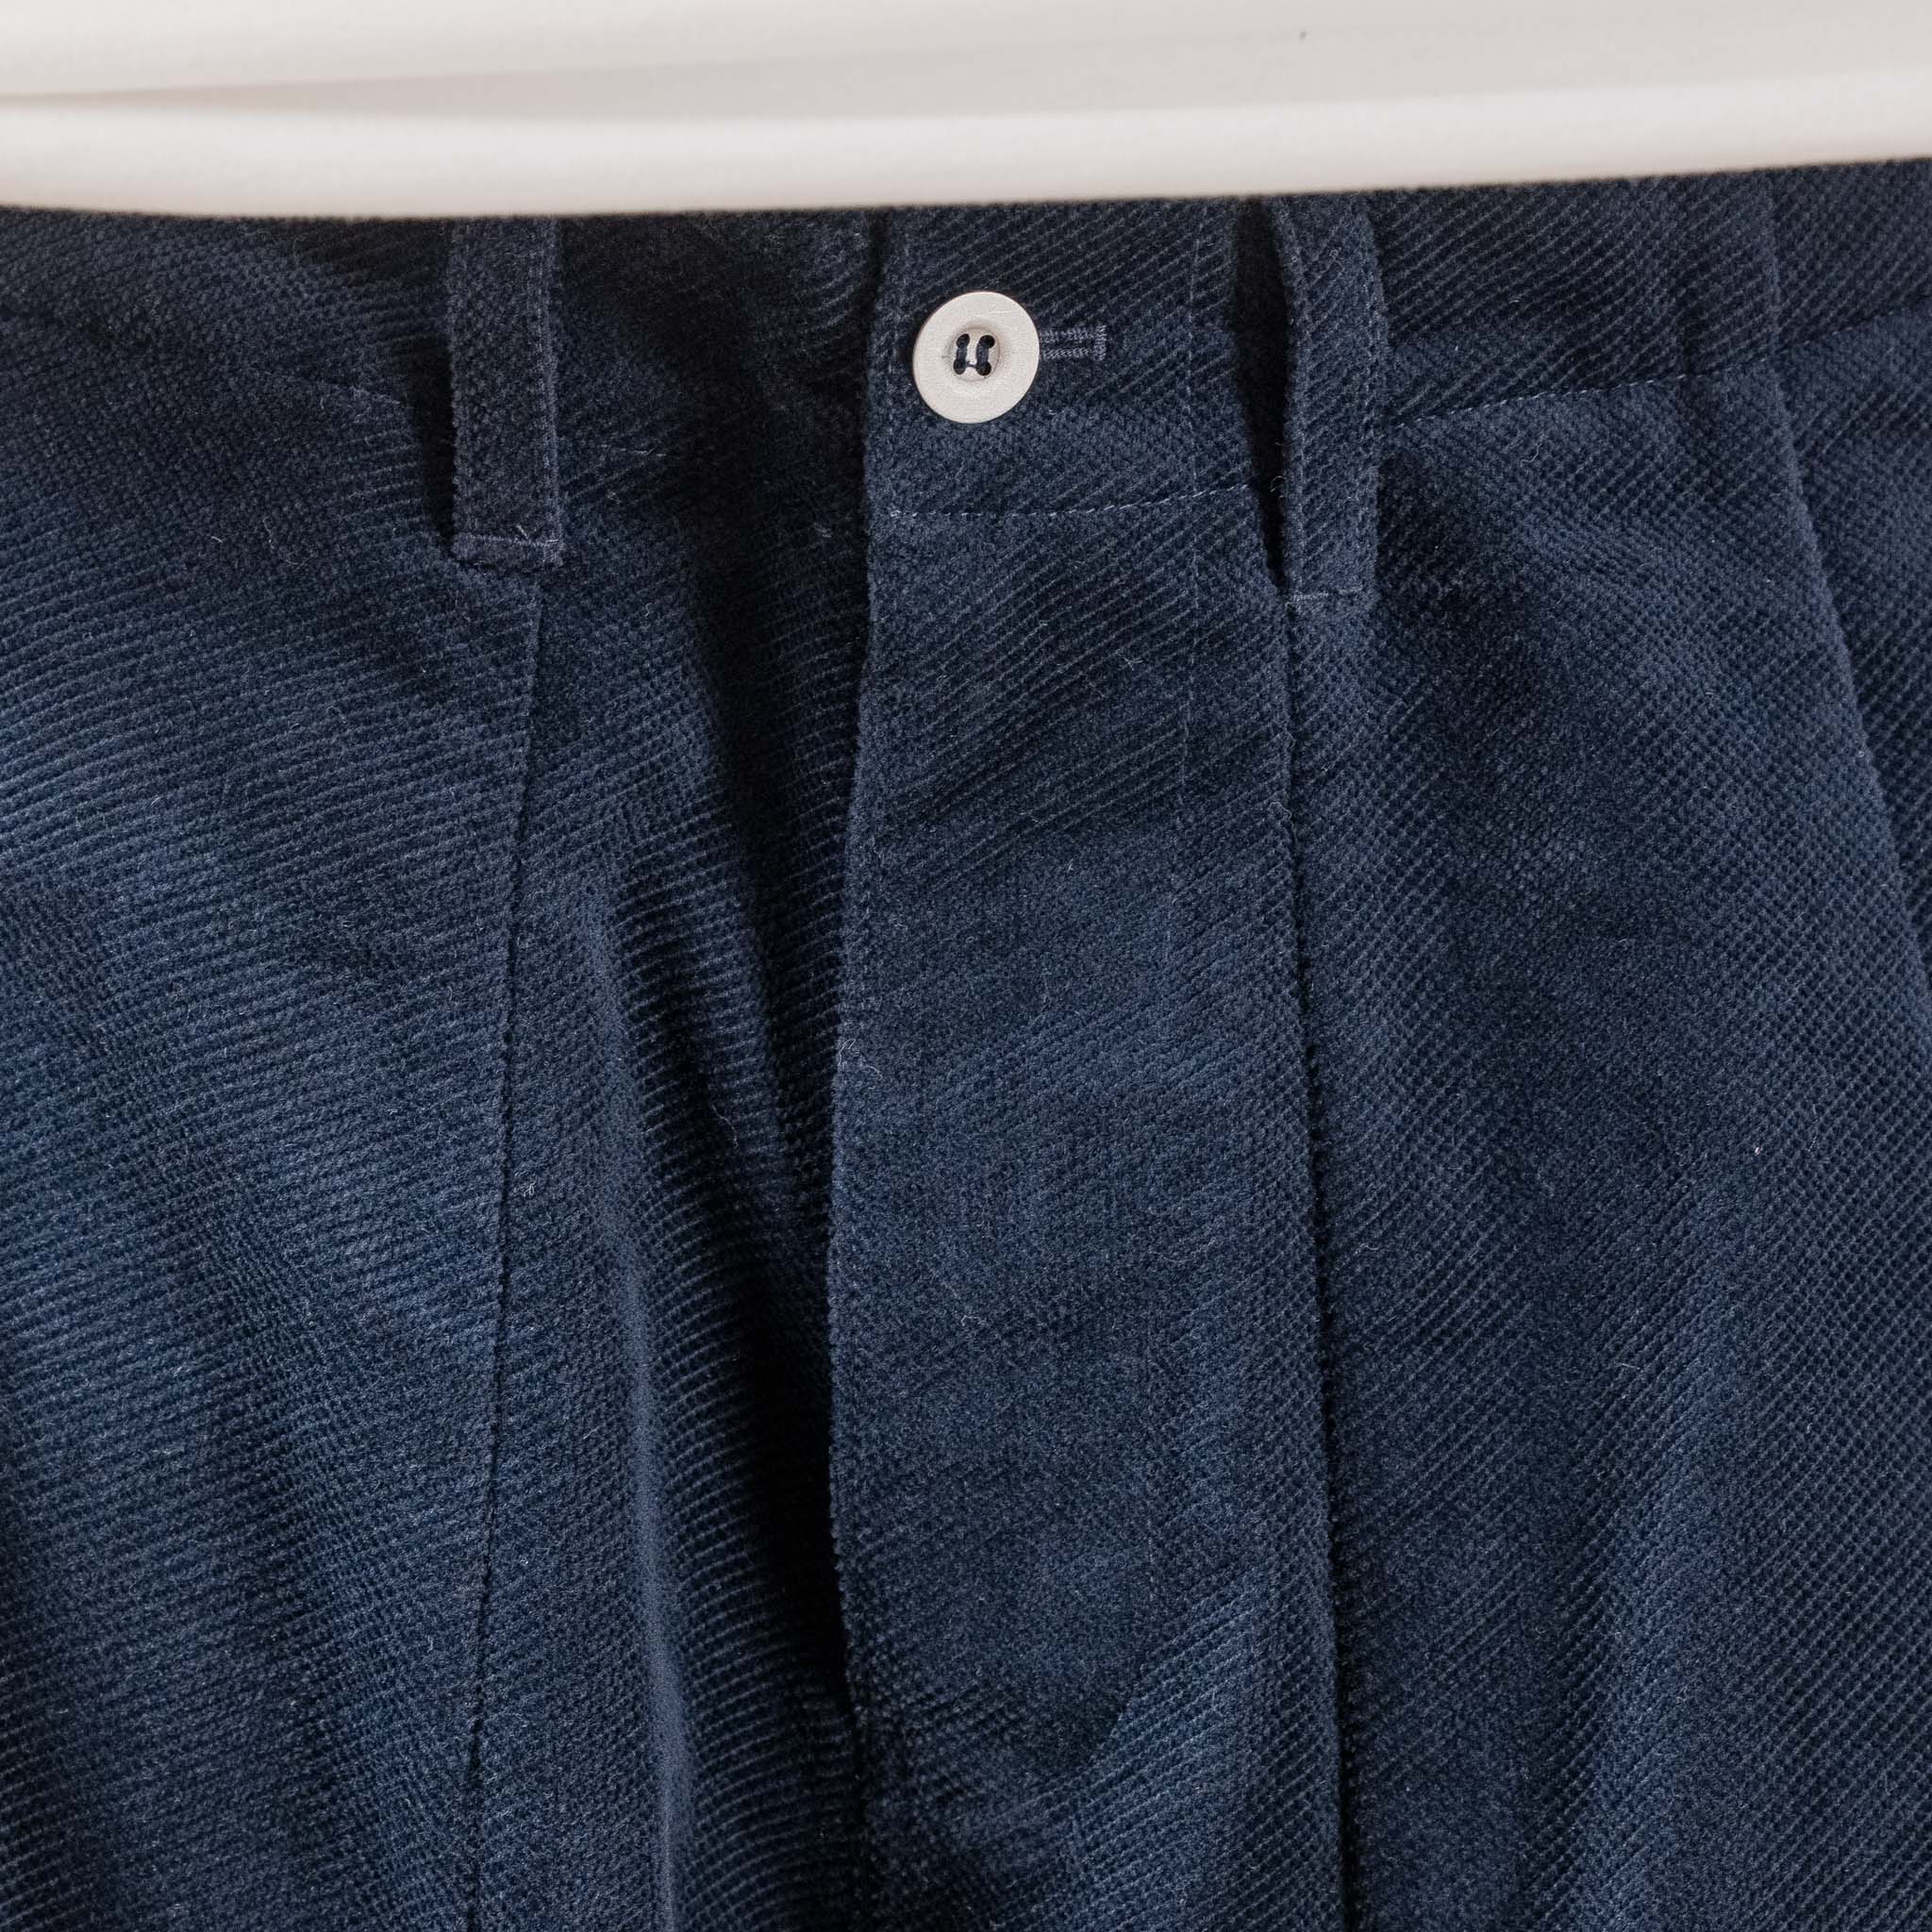 Merely Made - Premium Fluffy Nomadic Pants - Navy Blue